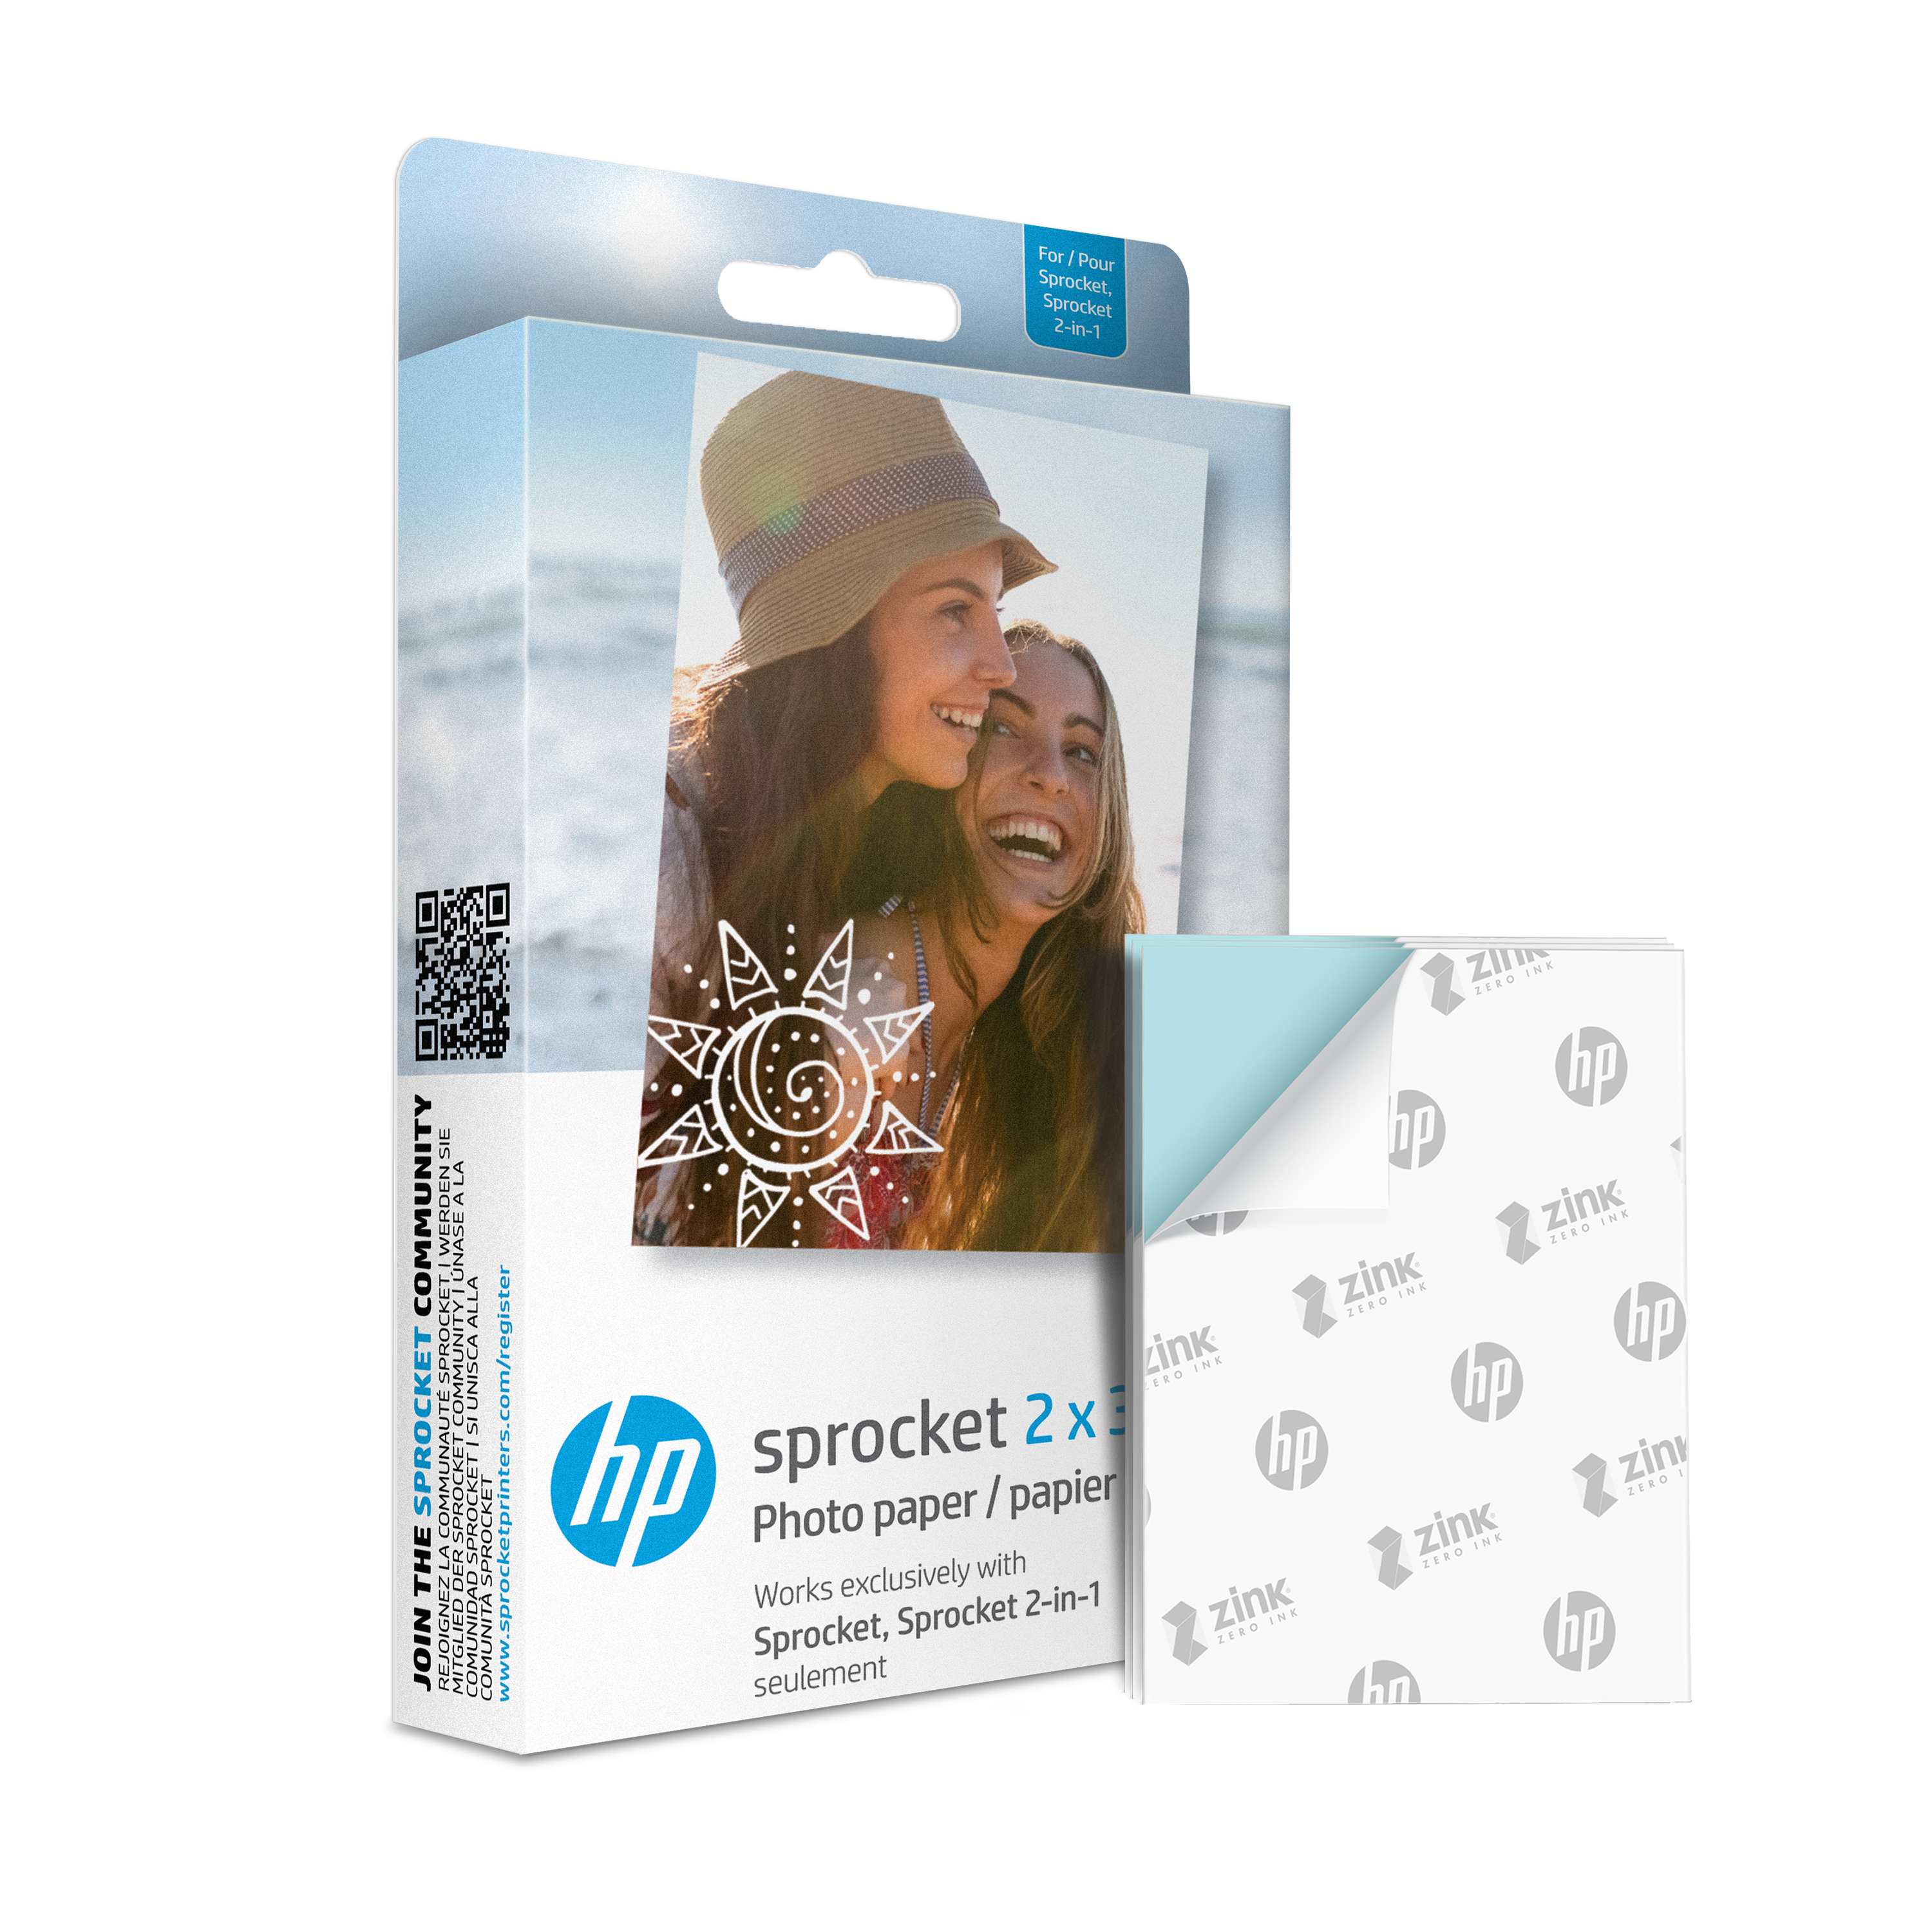 HP Sprocket 2x3 Zink Photo Paper (50 Sheets)